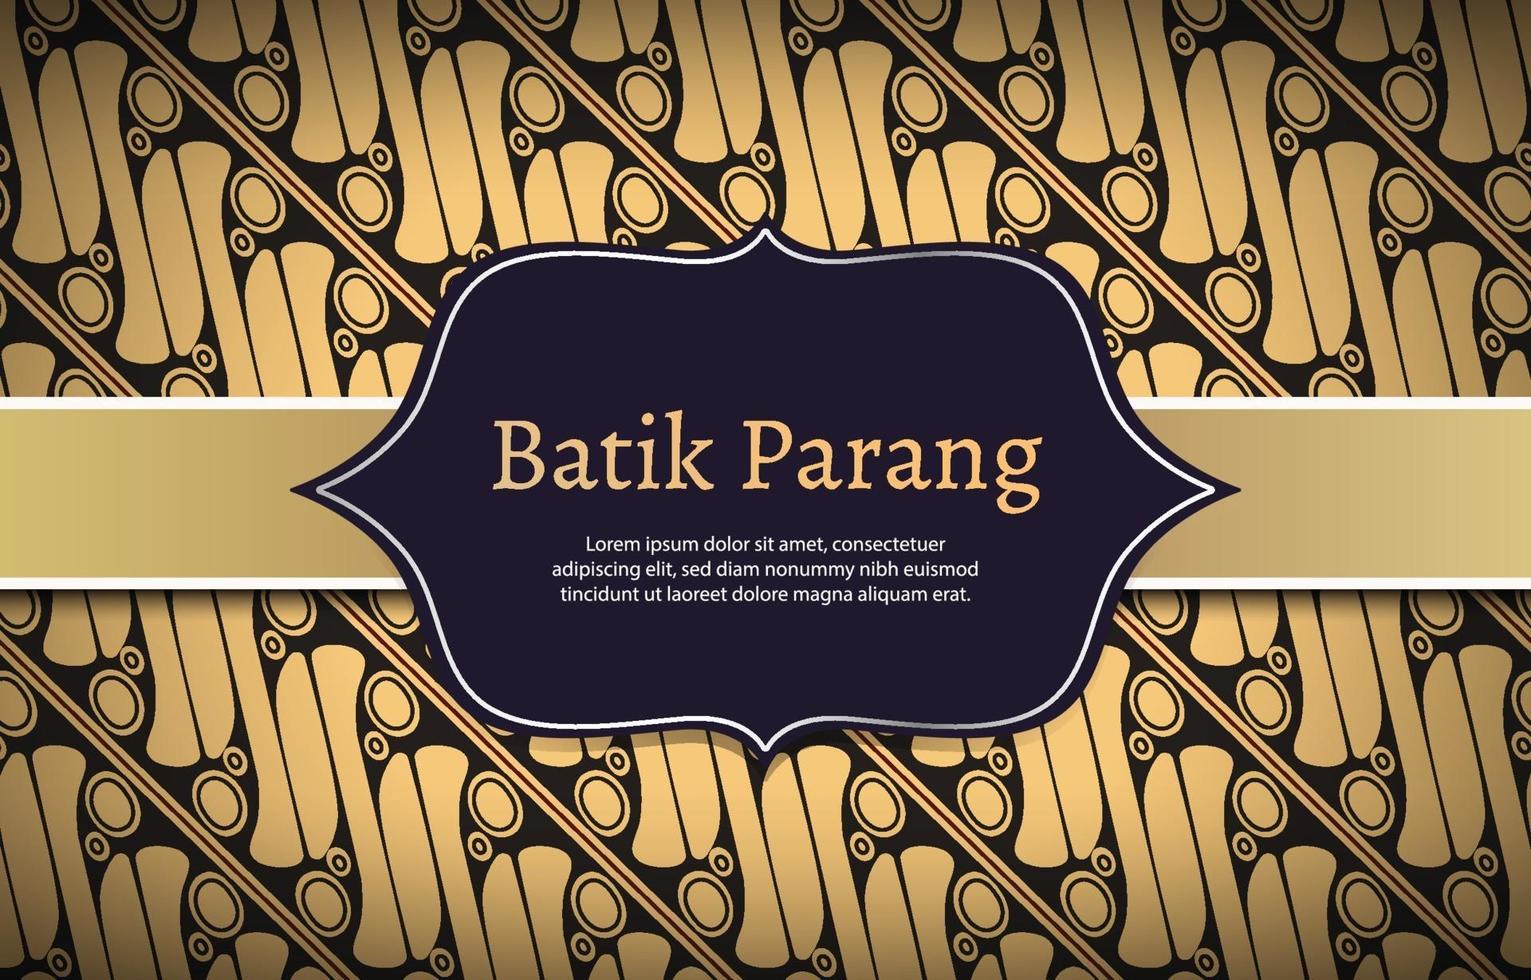 Batik Parang Background Vector